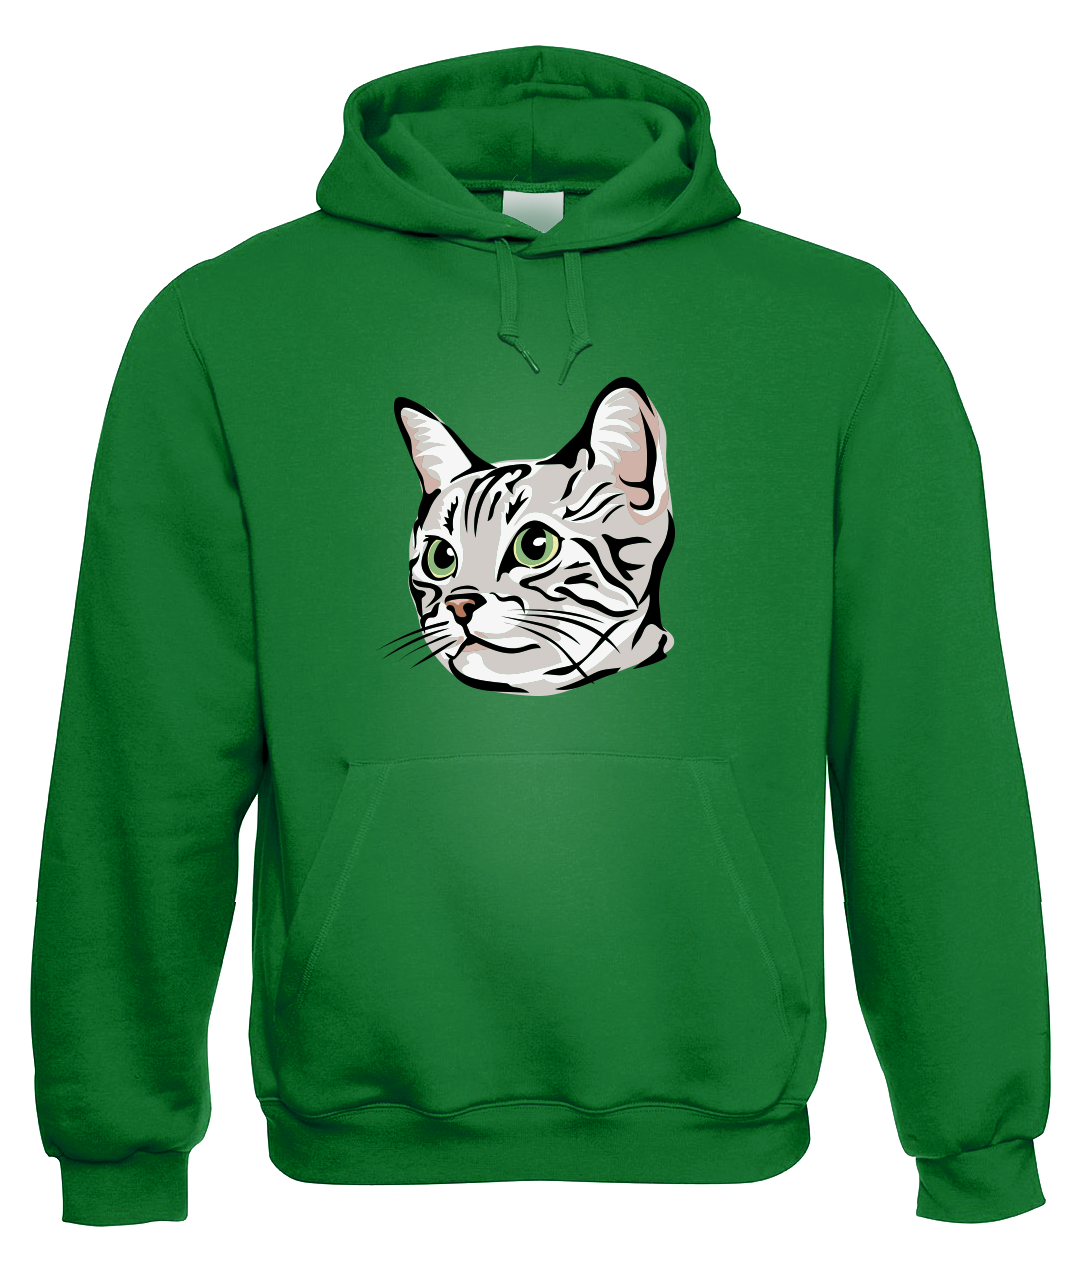 Mikina s kočkou - Zelenoočka Velikost: XL, Barva: Zelená